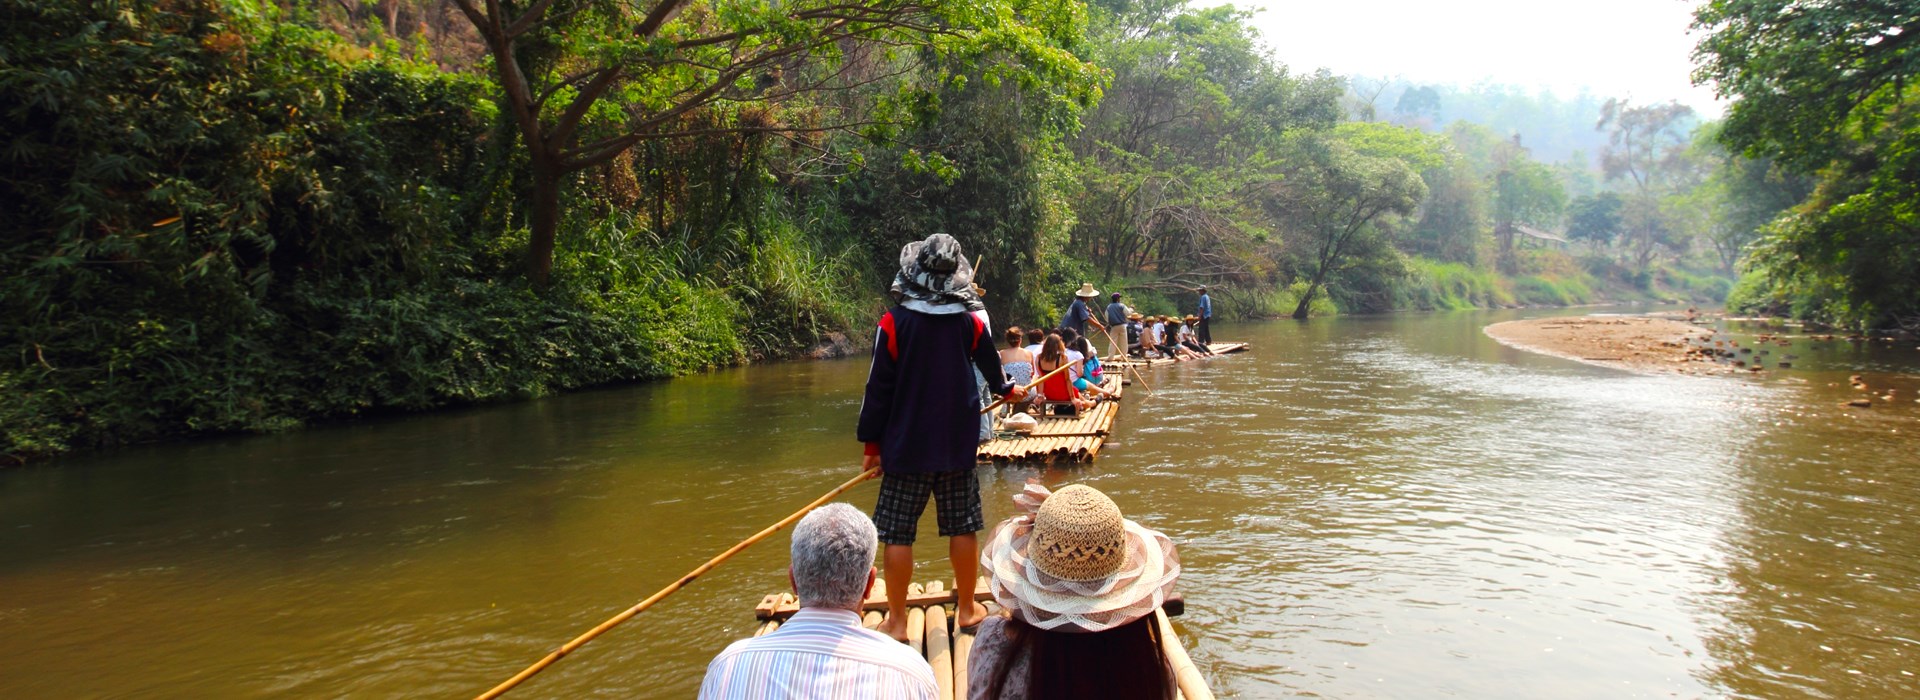 Visiter La rivière Mae Tang en rafting bambou - Thaïlande